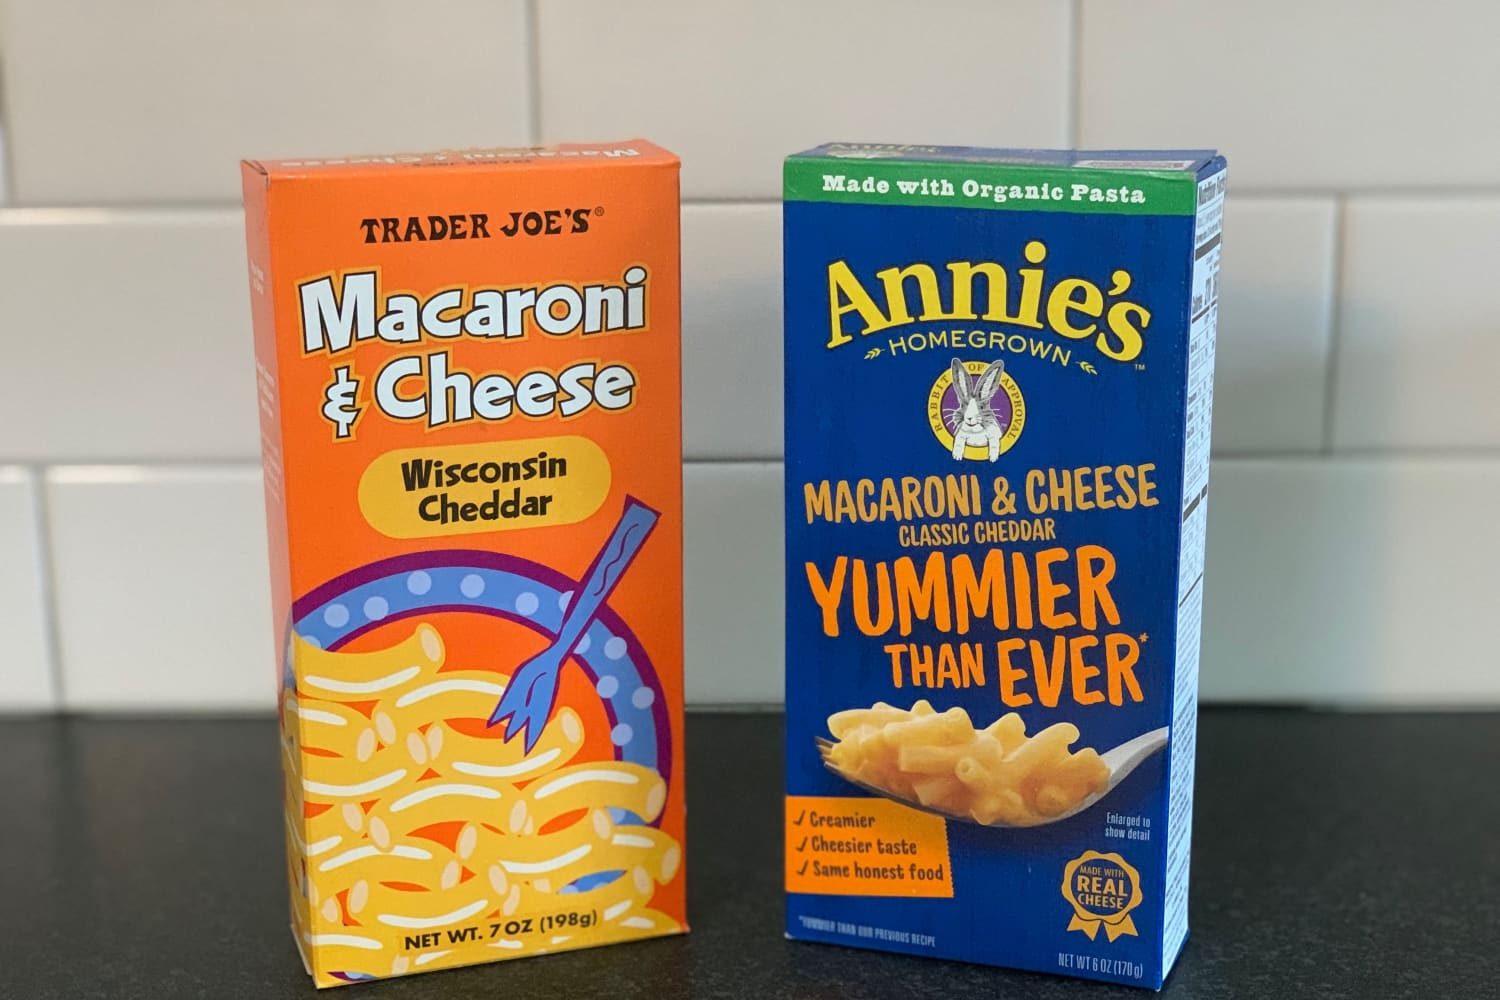 Annie's Organic Mac & Cheese Variety Pack (6 Ounce box, 12 Count)